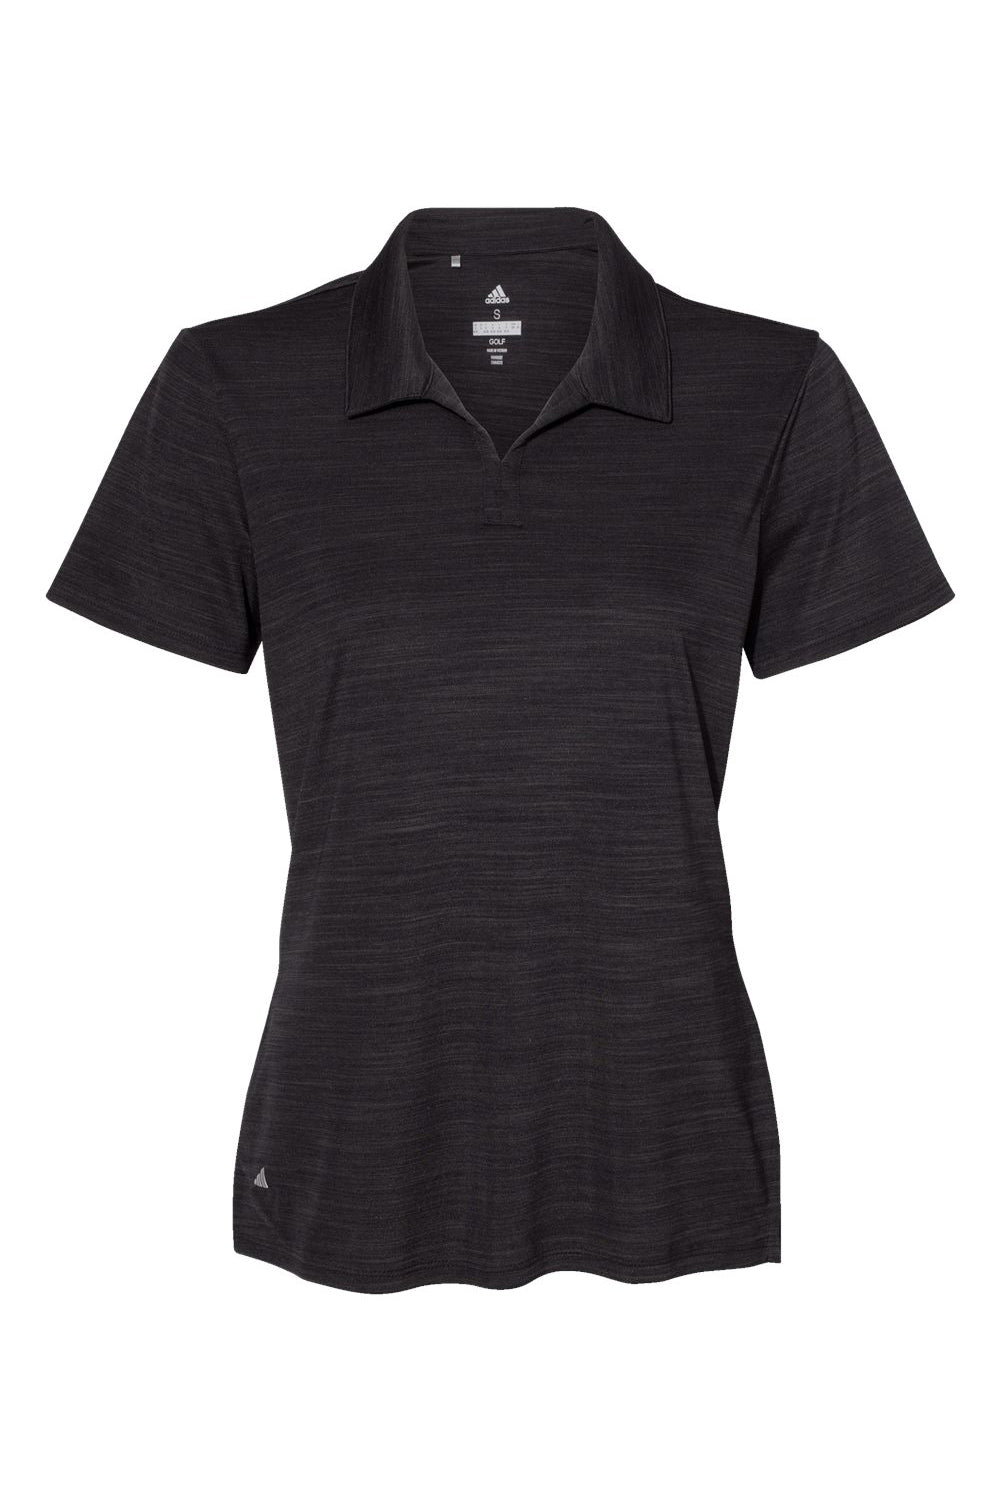 Adidas A403 Womens UPF 50+ Short Sleeve Polo Shirt Black Melange Flat Front